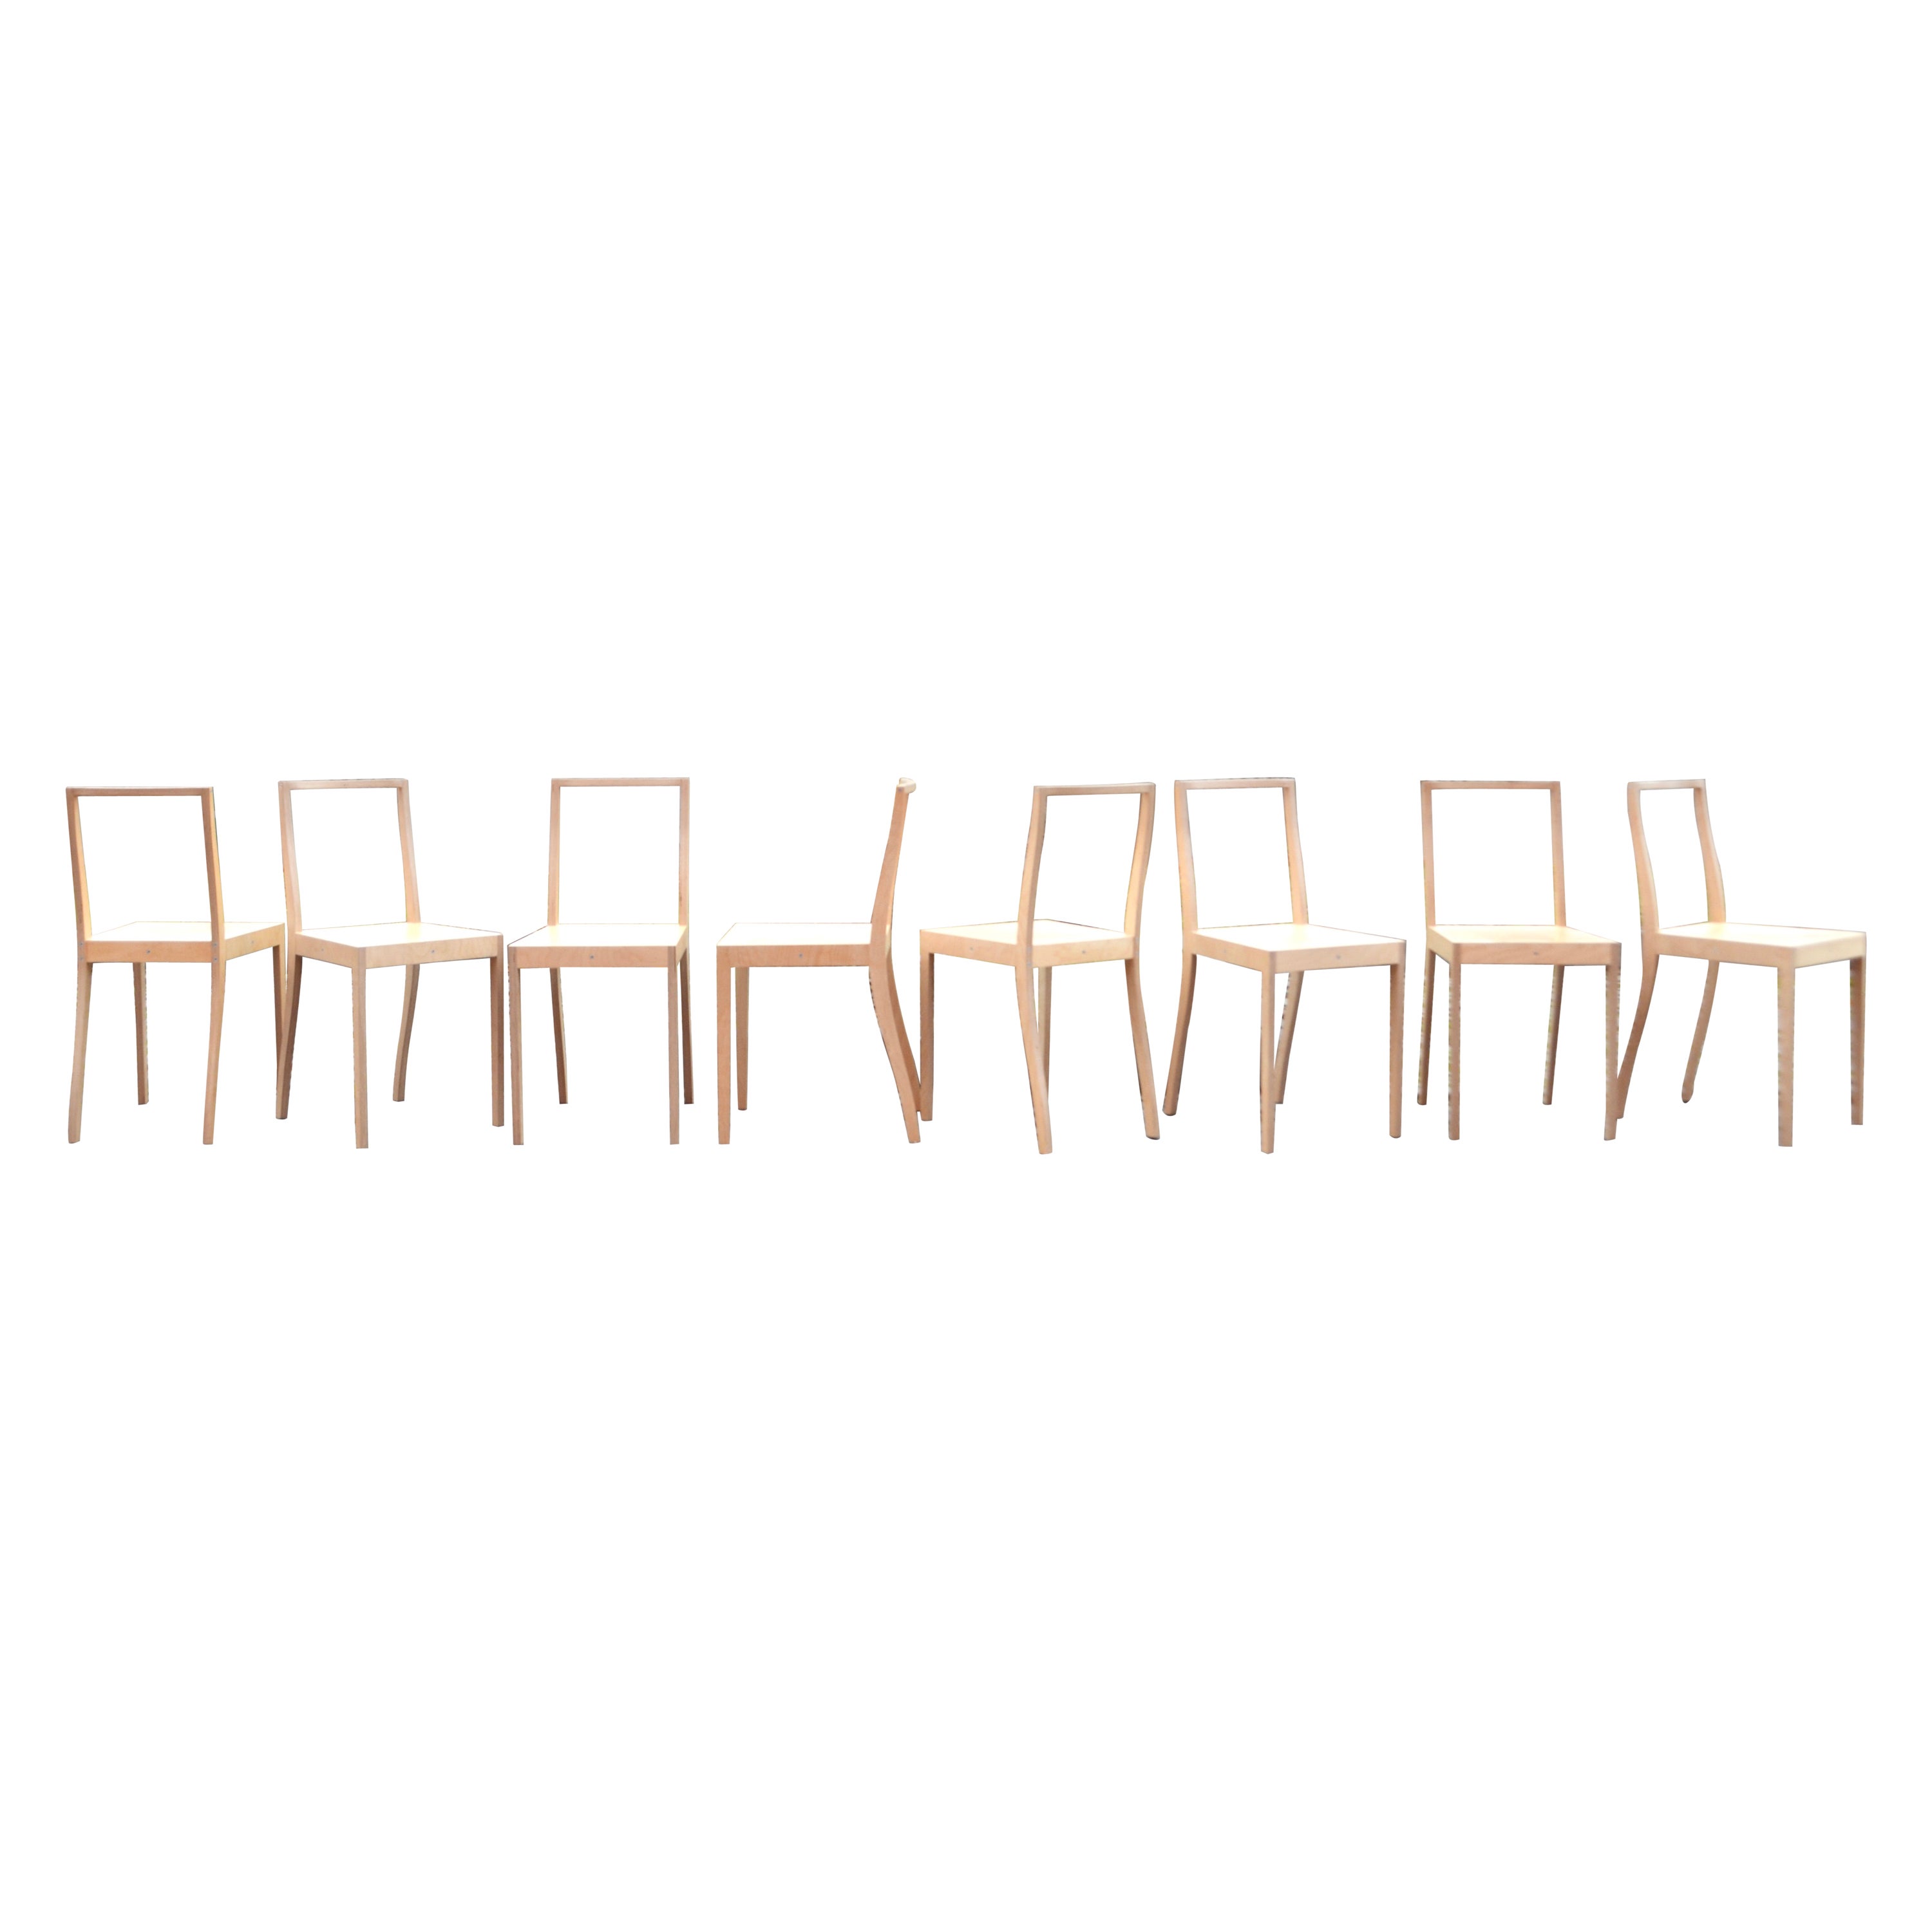 Jasper Morrison Ply Chair Plywood for Vitra Set of 8